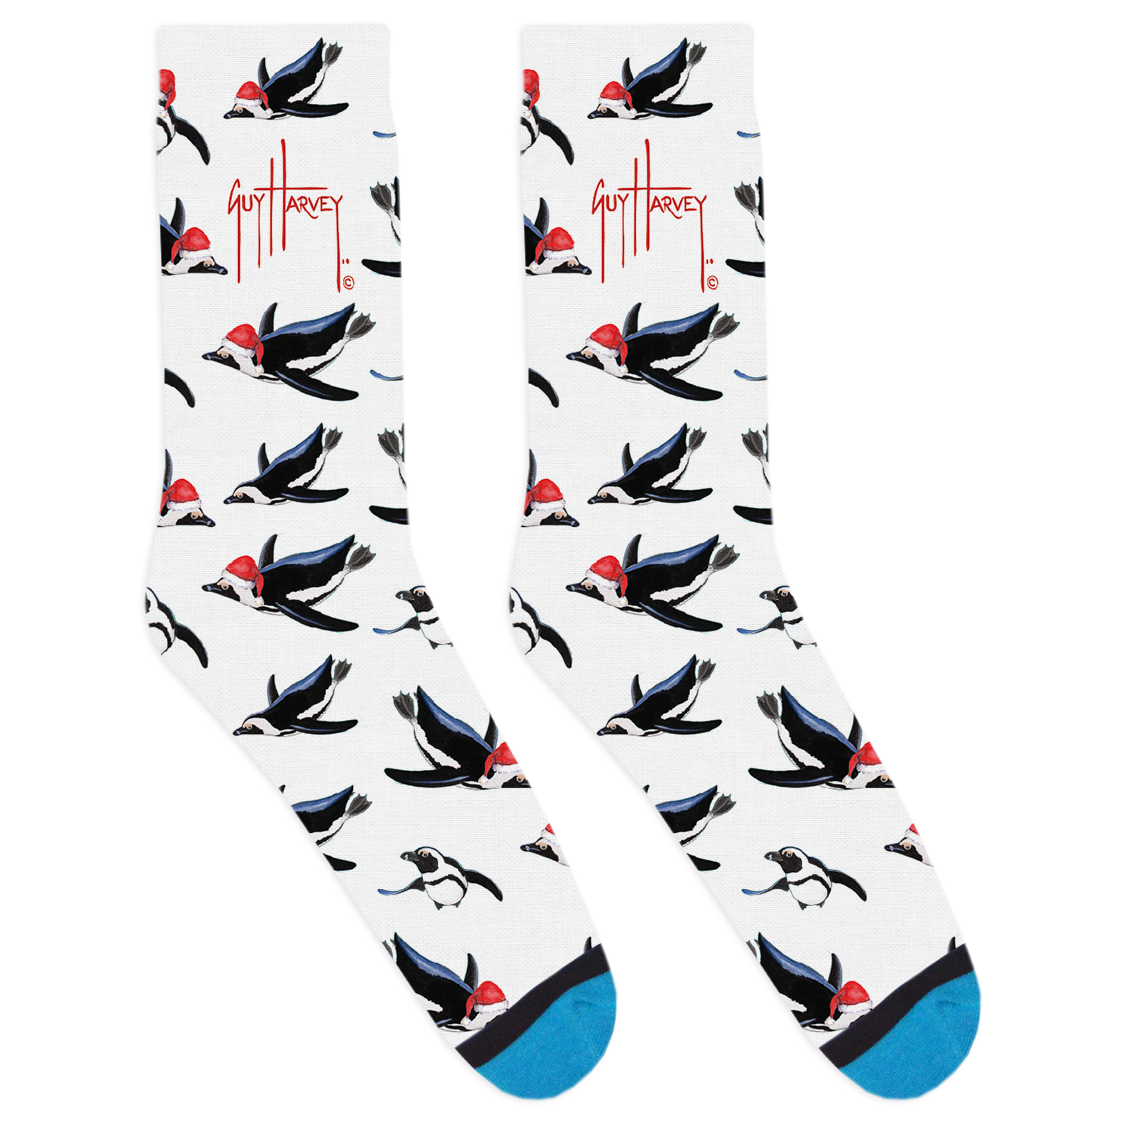 Holiday Penguins Socks View 1